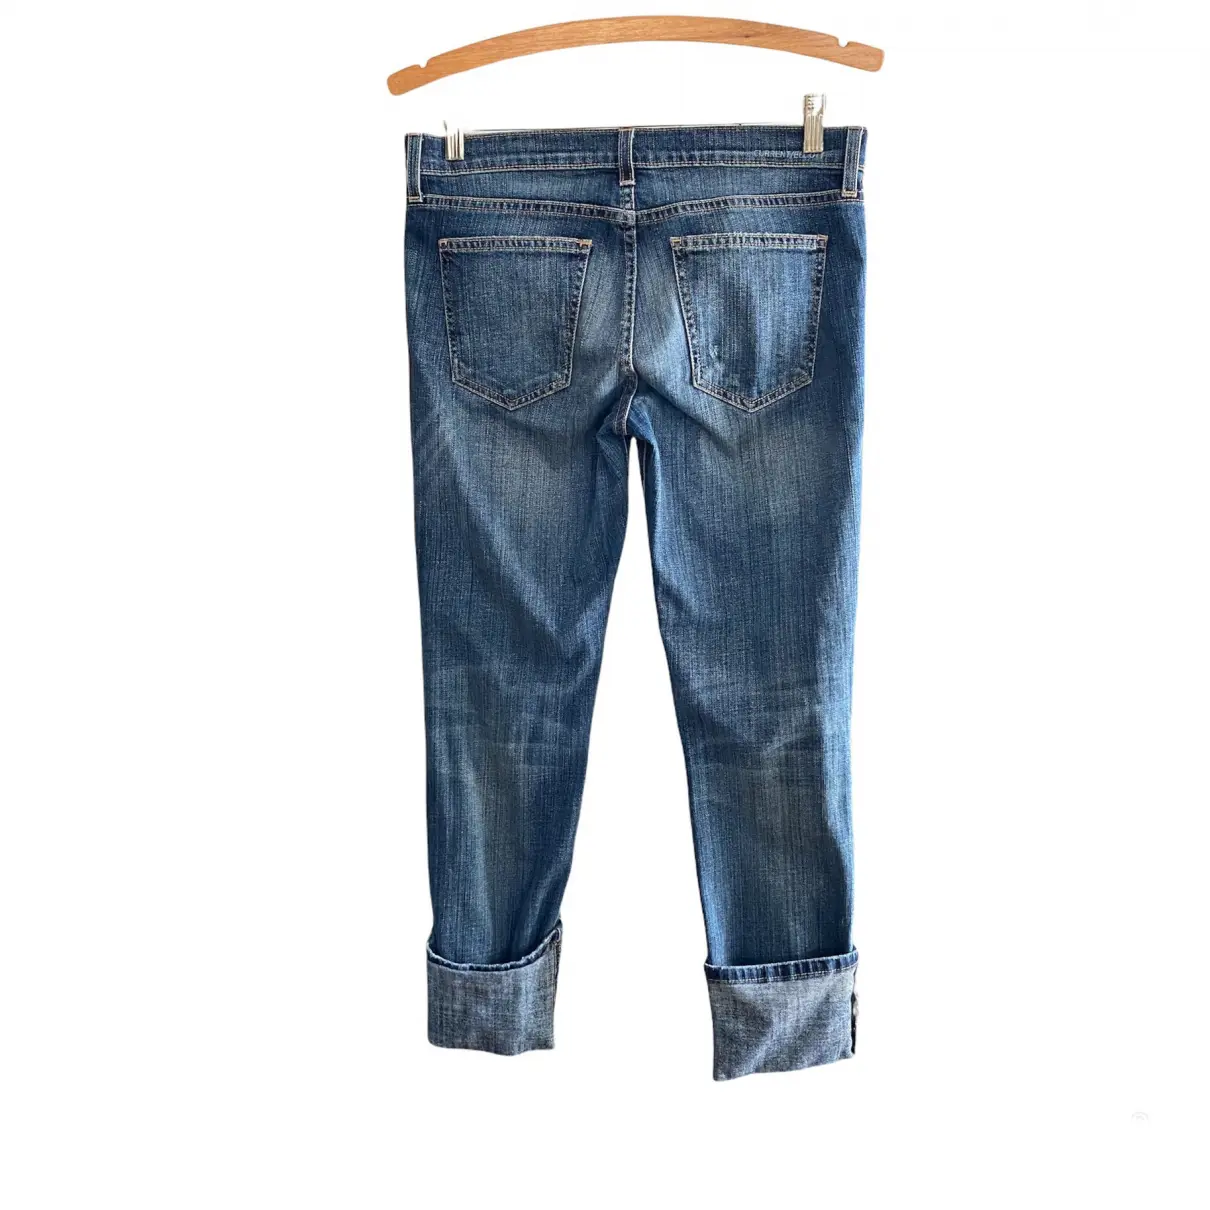 Buy Current Elliott Jeans online